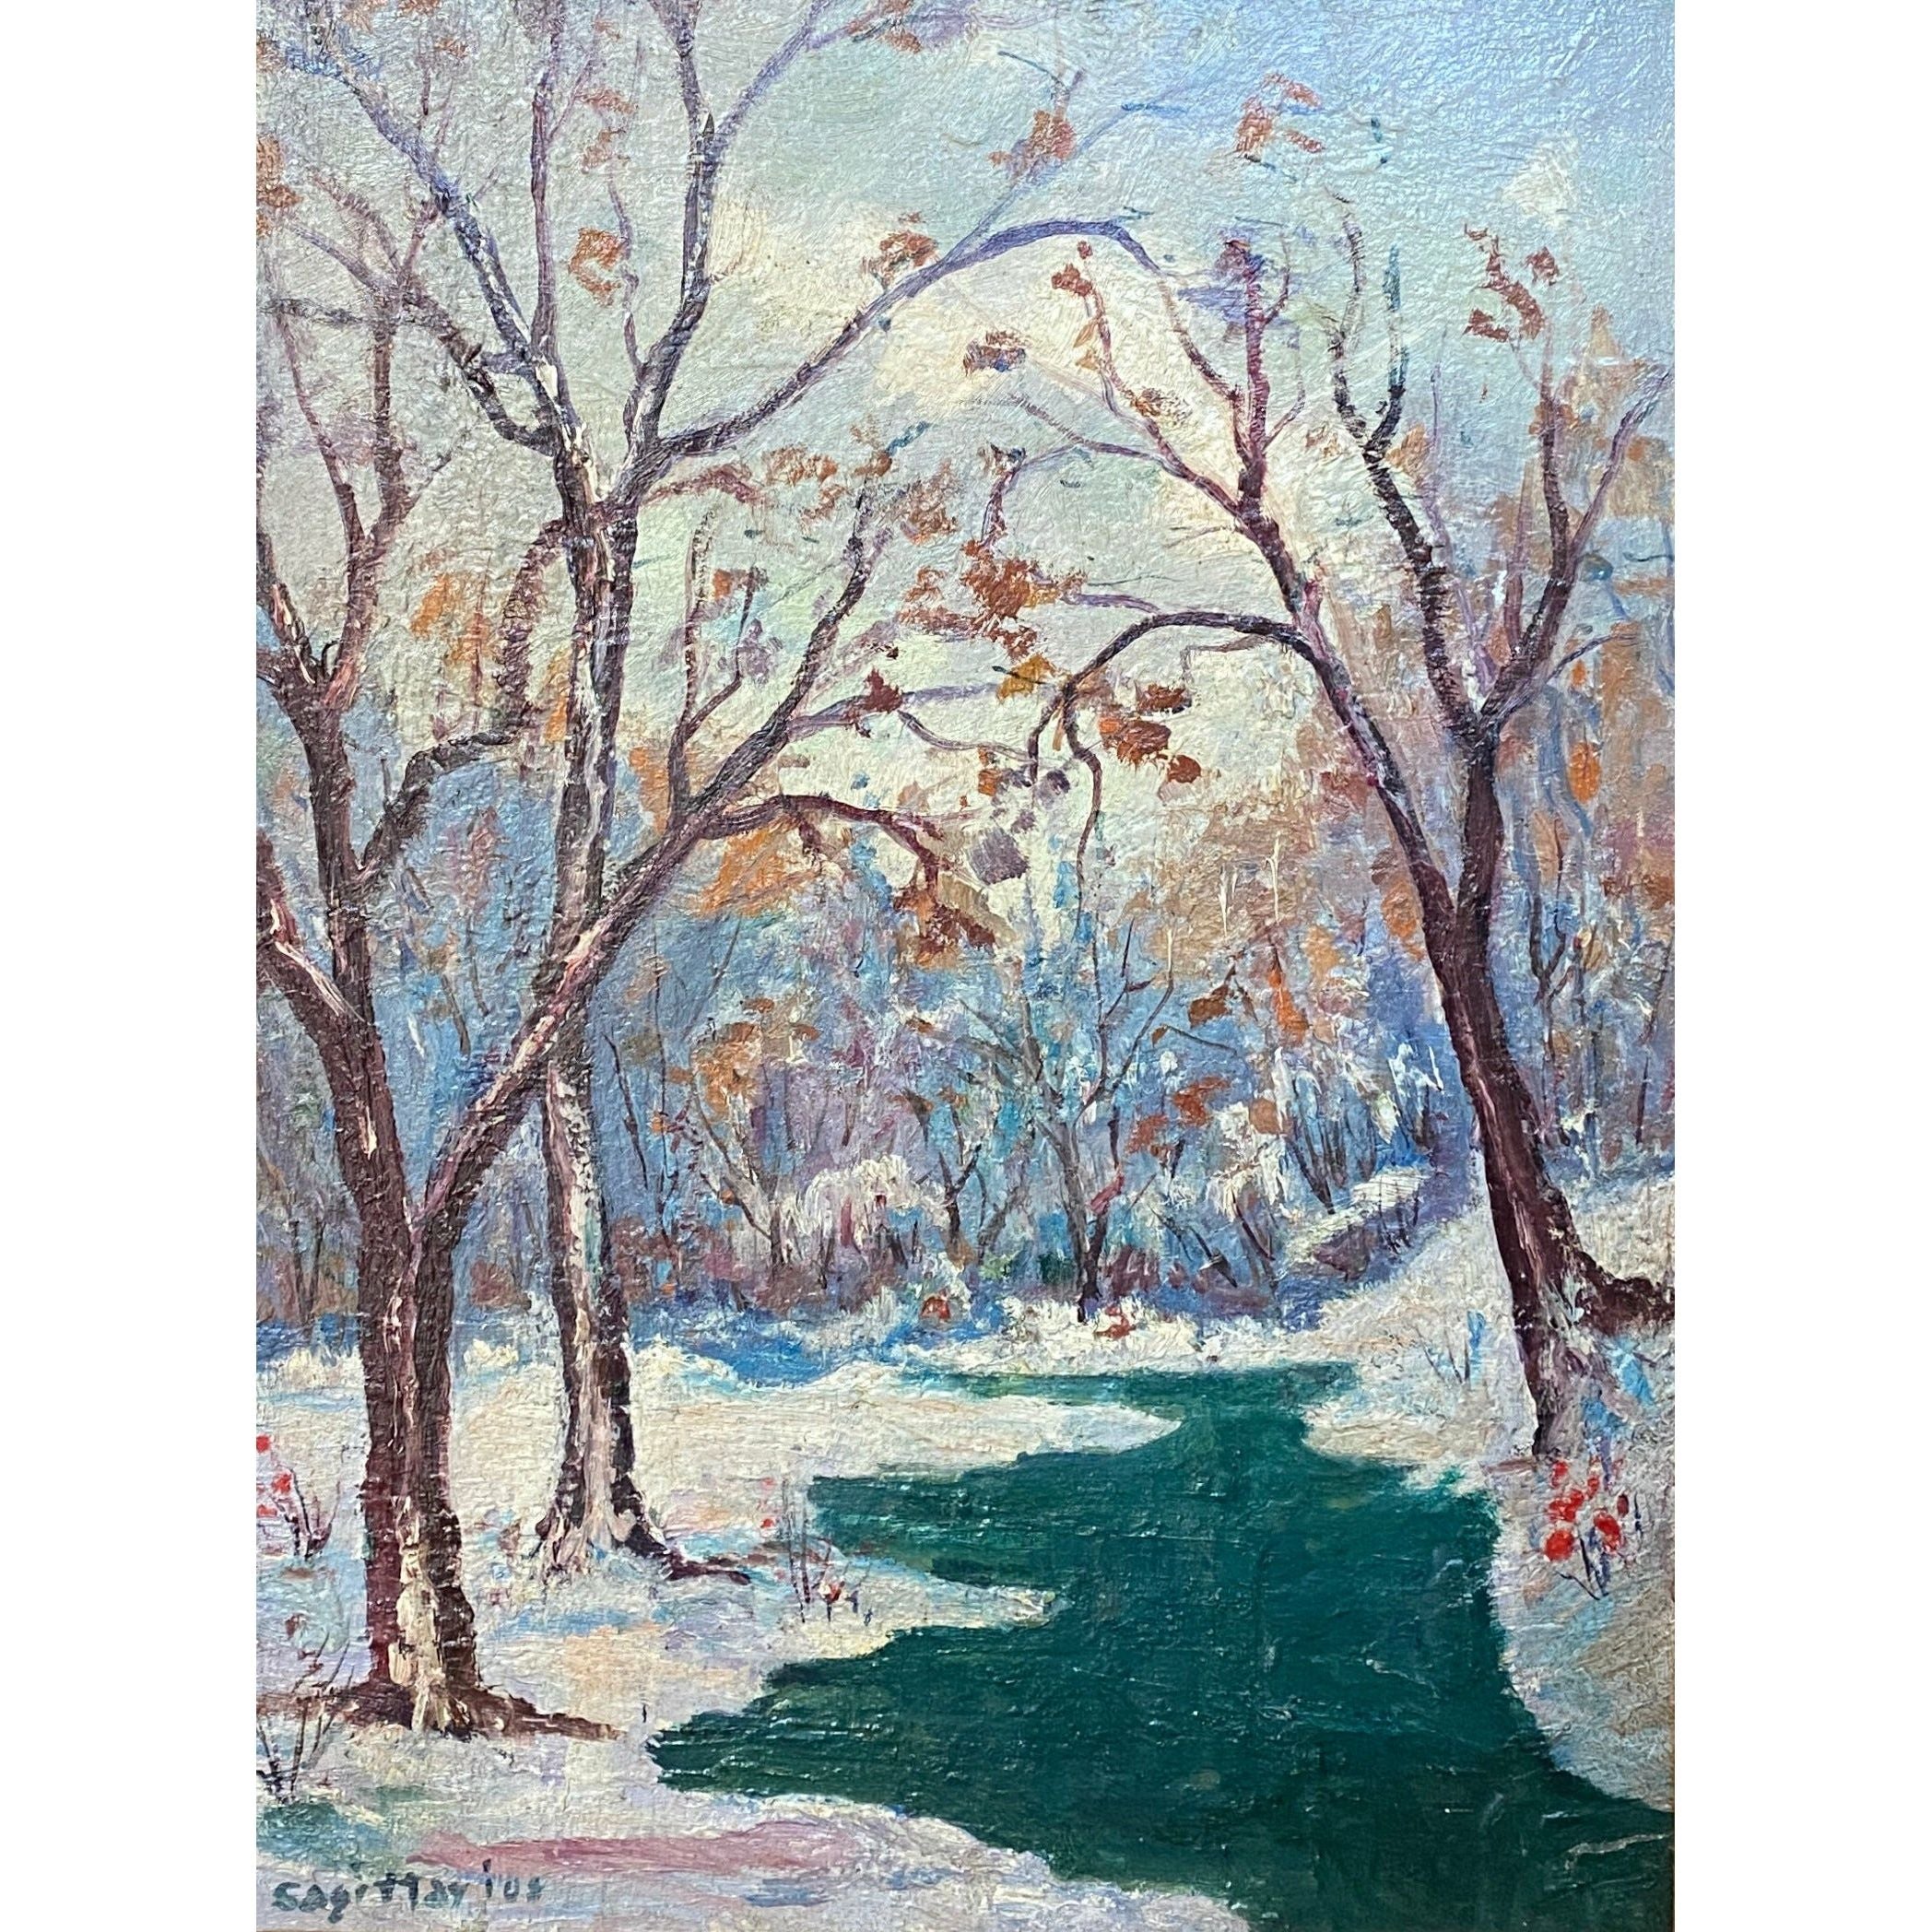 Vintage Impressionist Landscape Painting